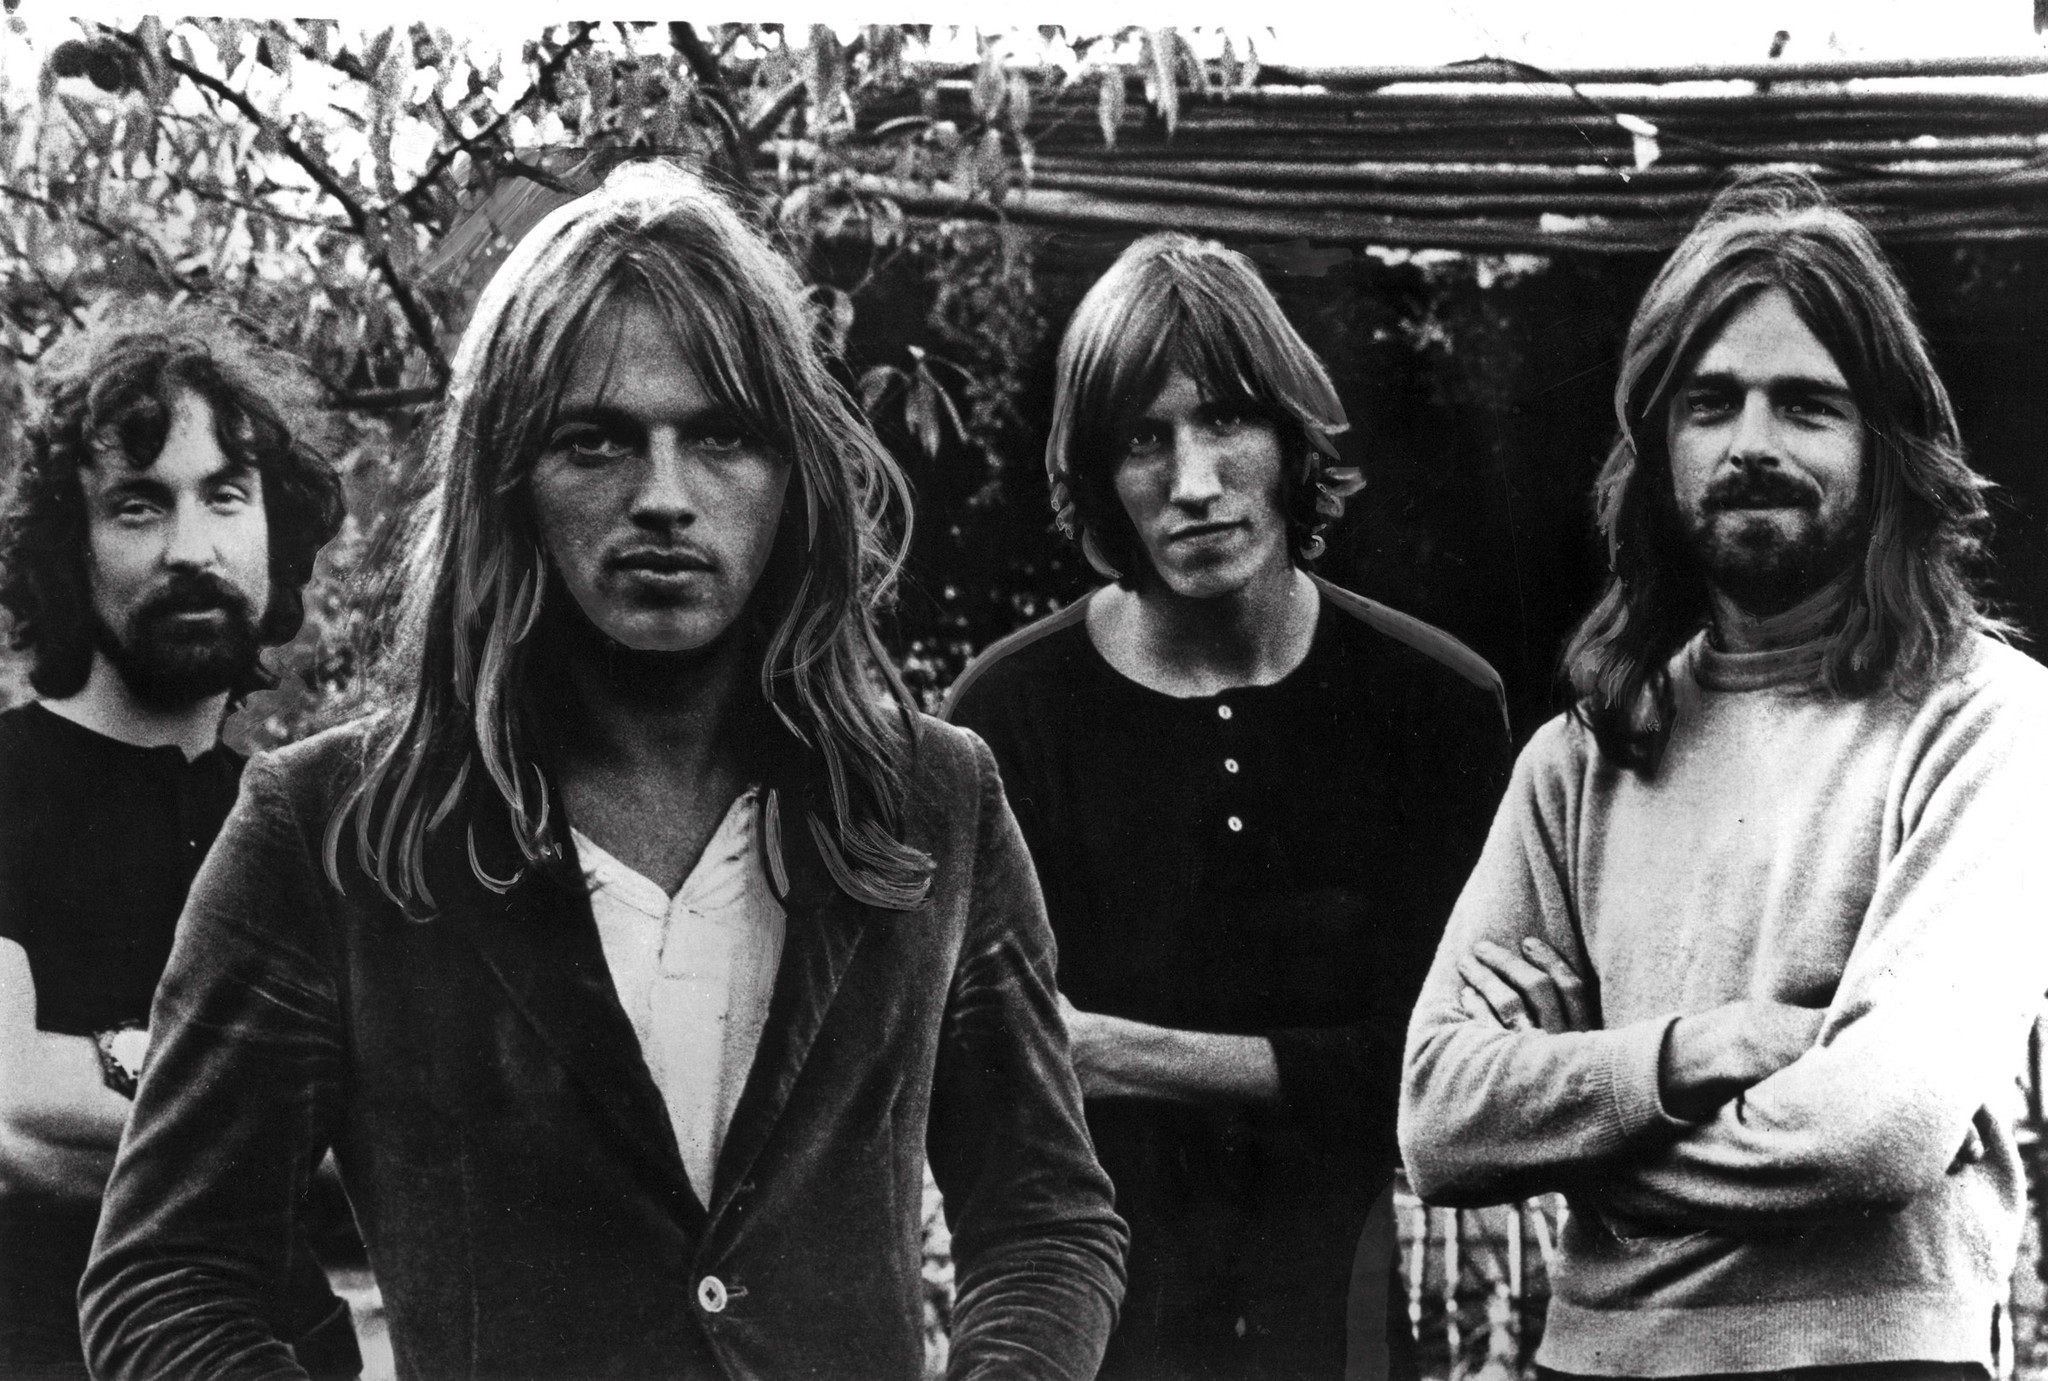 Pink Floyd – The Great Gig in the Sky Lyrics